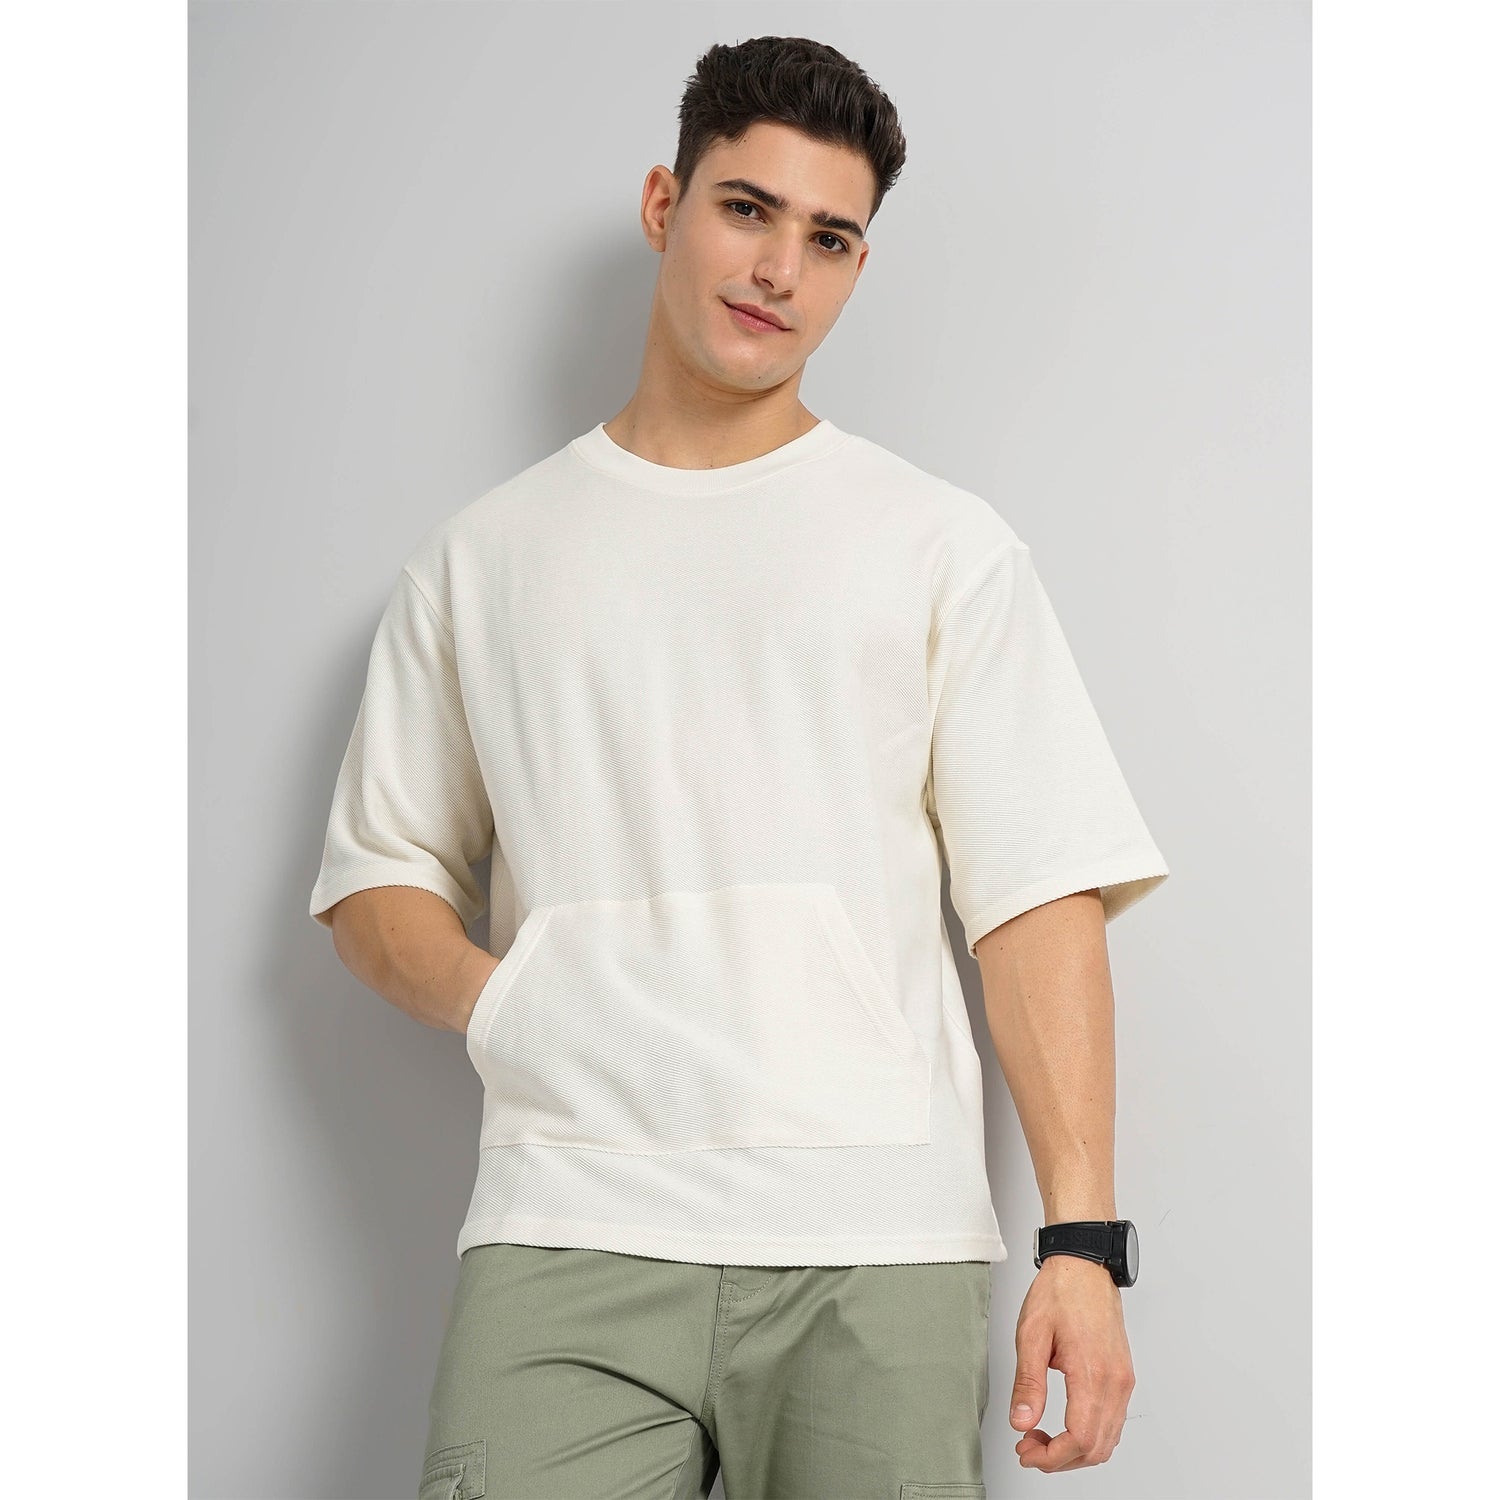 Solid Beige Cotton T-Shirt (FEKANGIN)